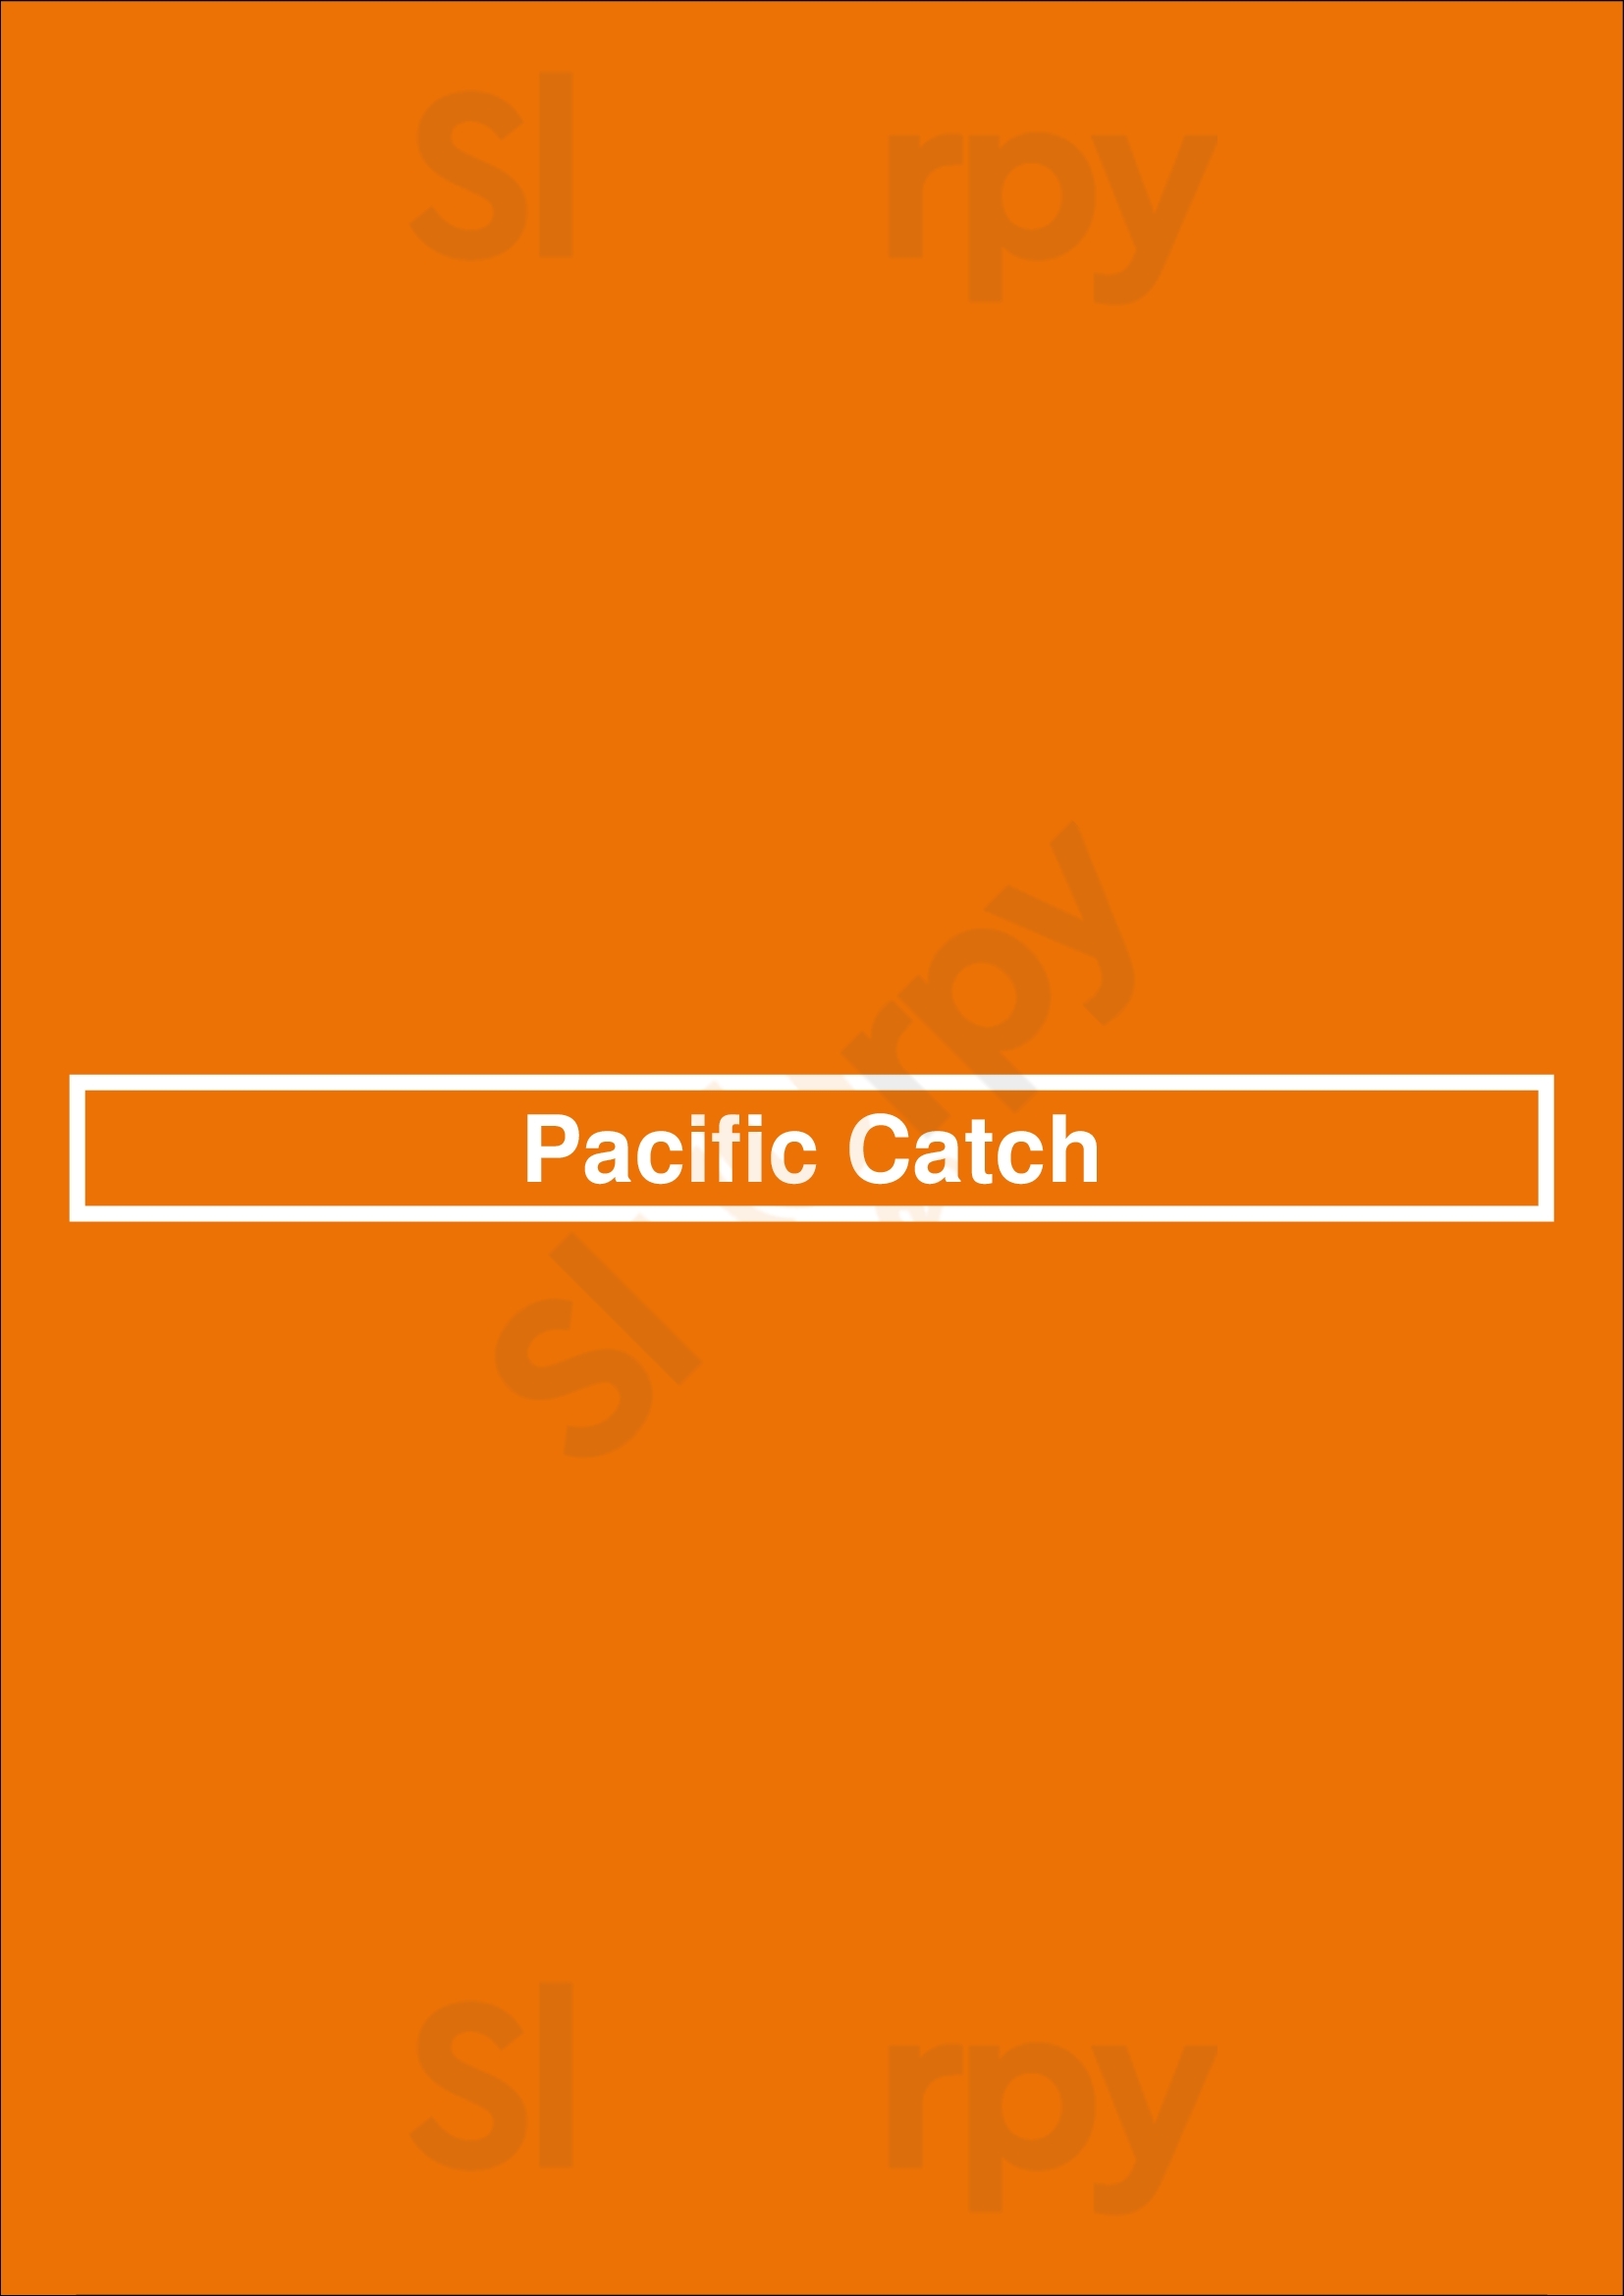 Pacific Catch San Francisco Menu - 1